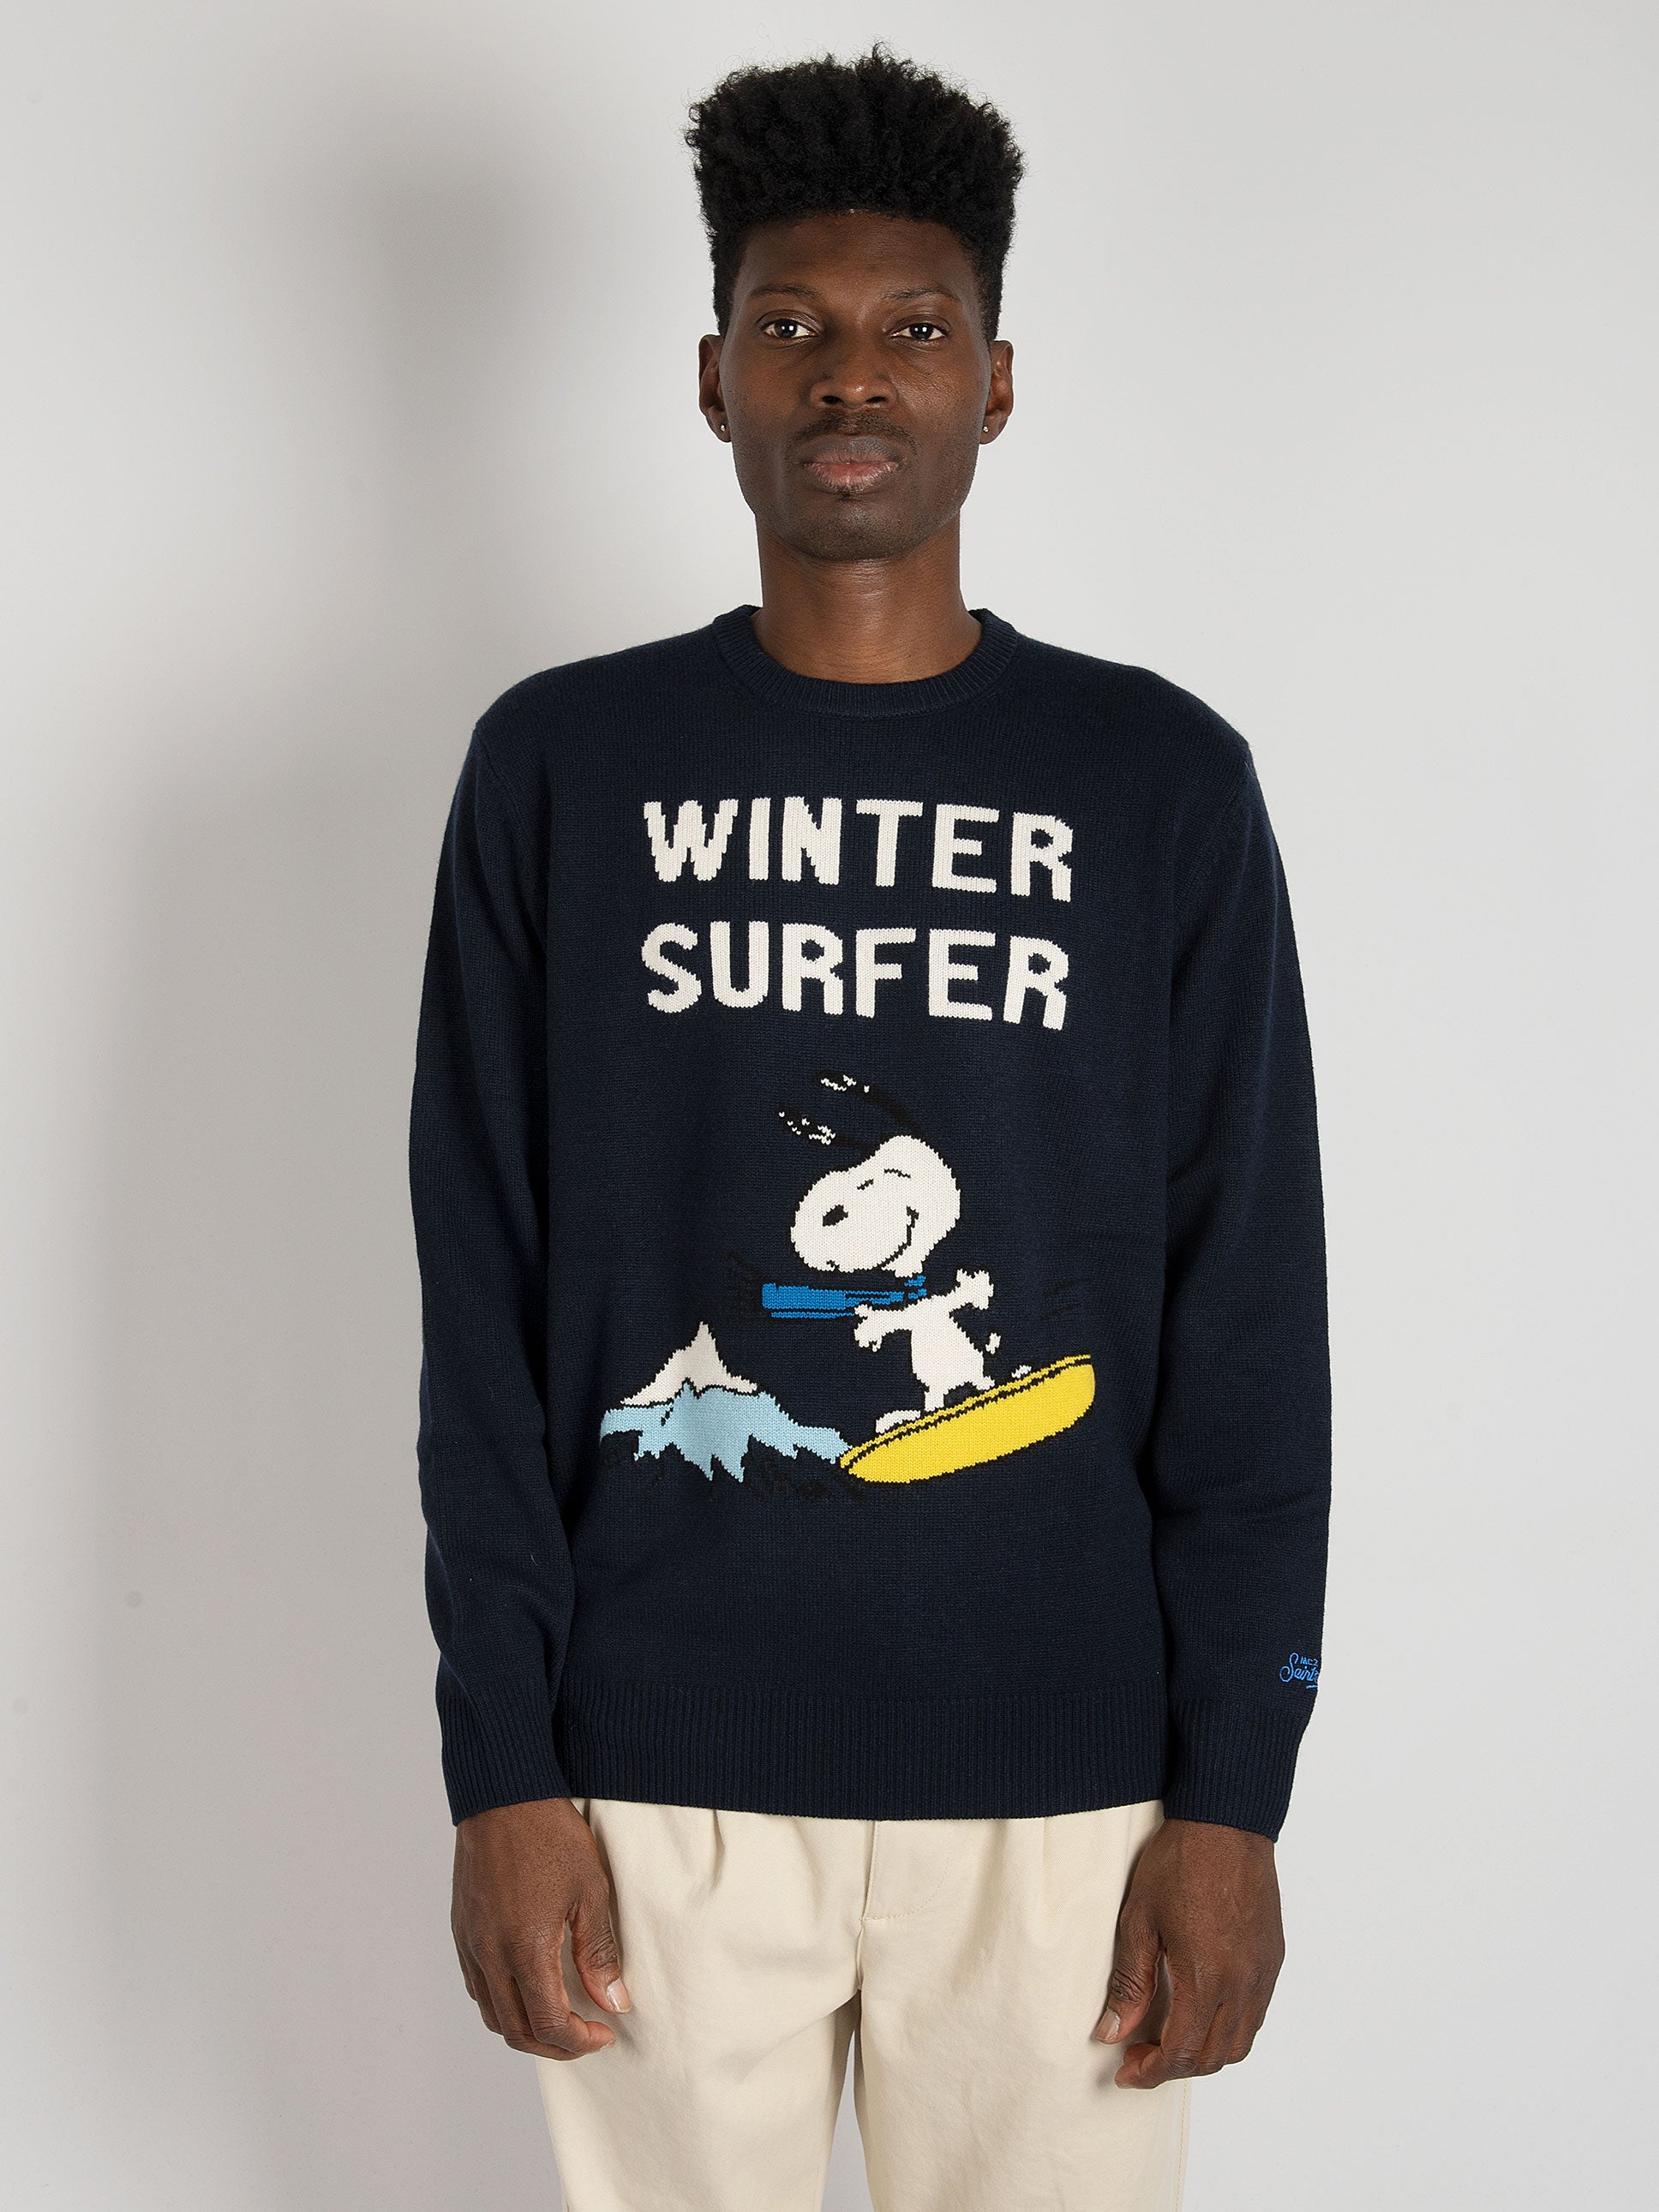 Maglia Snoopy W Surfer 61 - Blu Notte